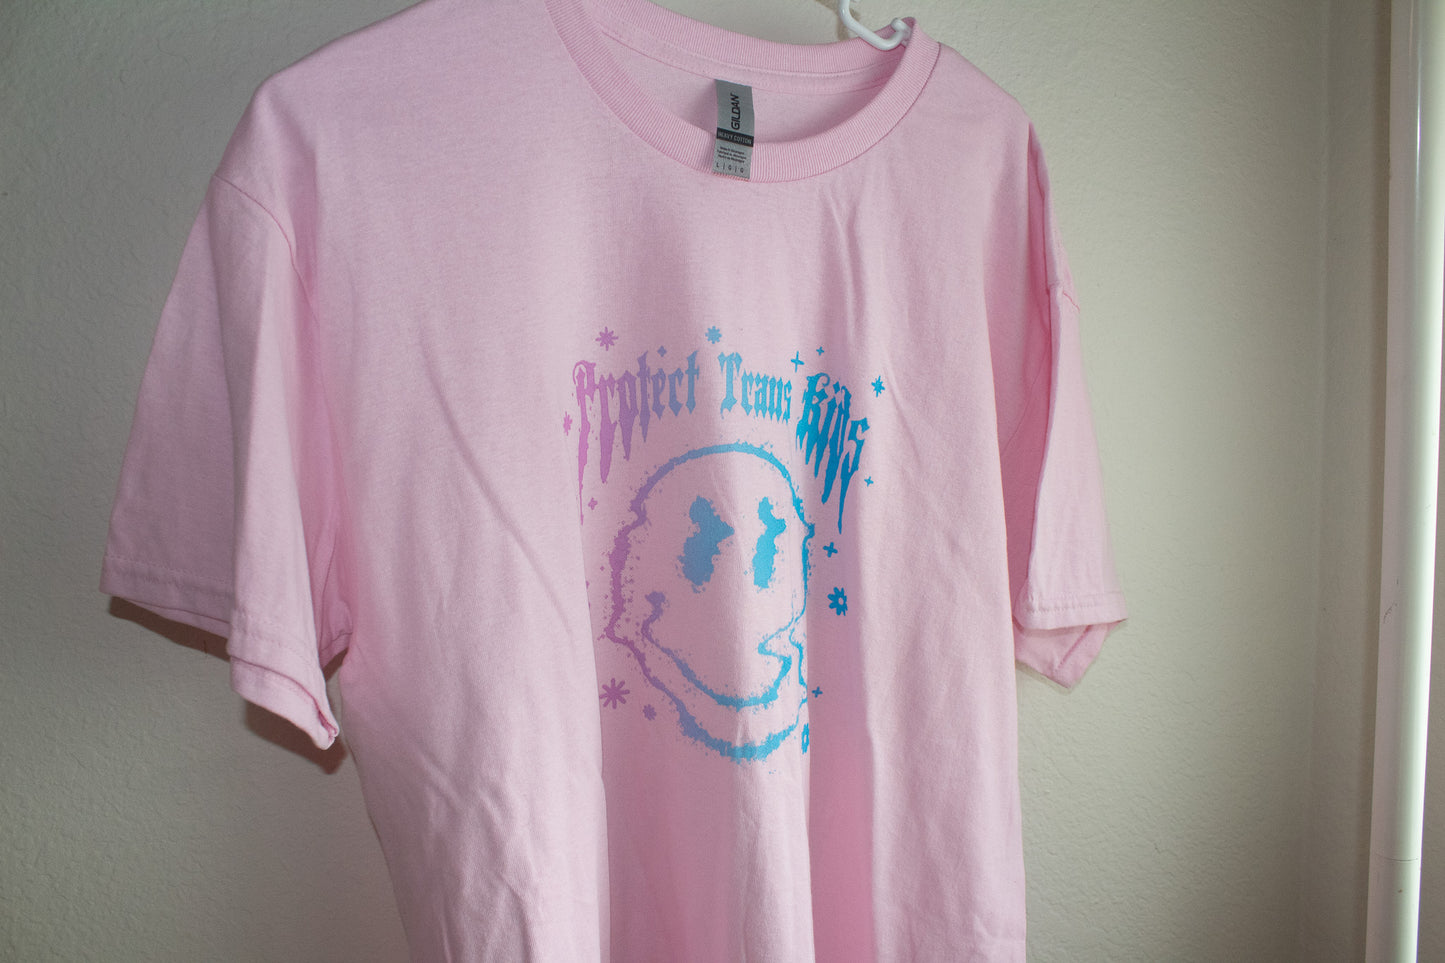 Protect Trans Kids T-shirt - S